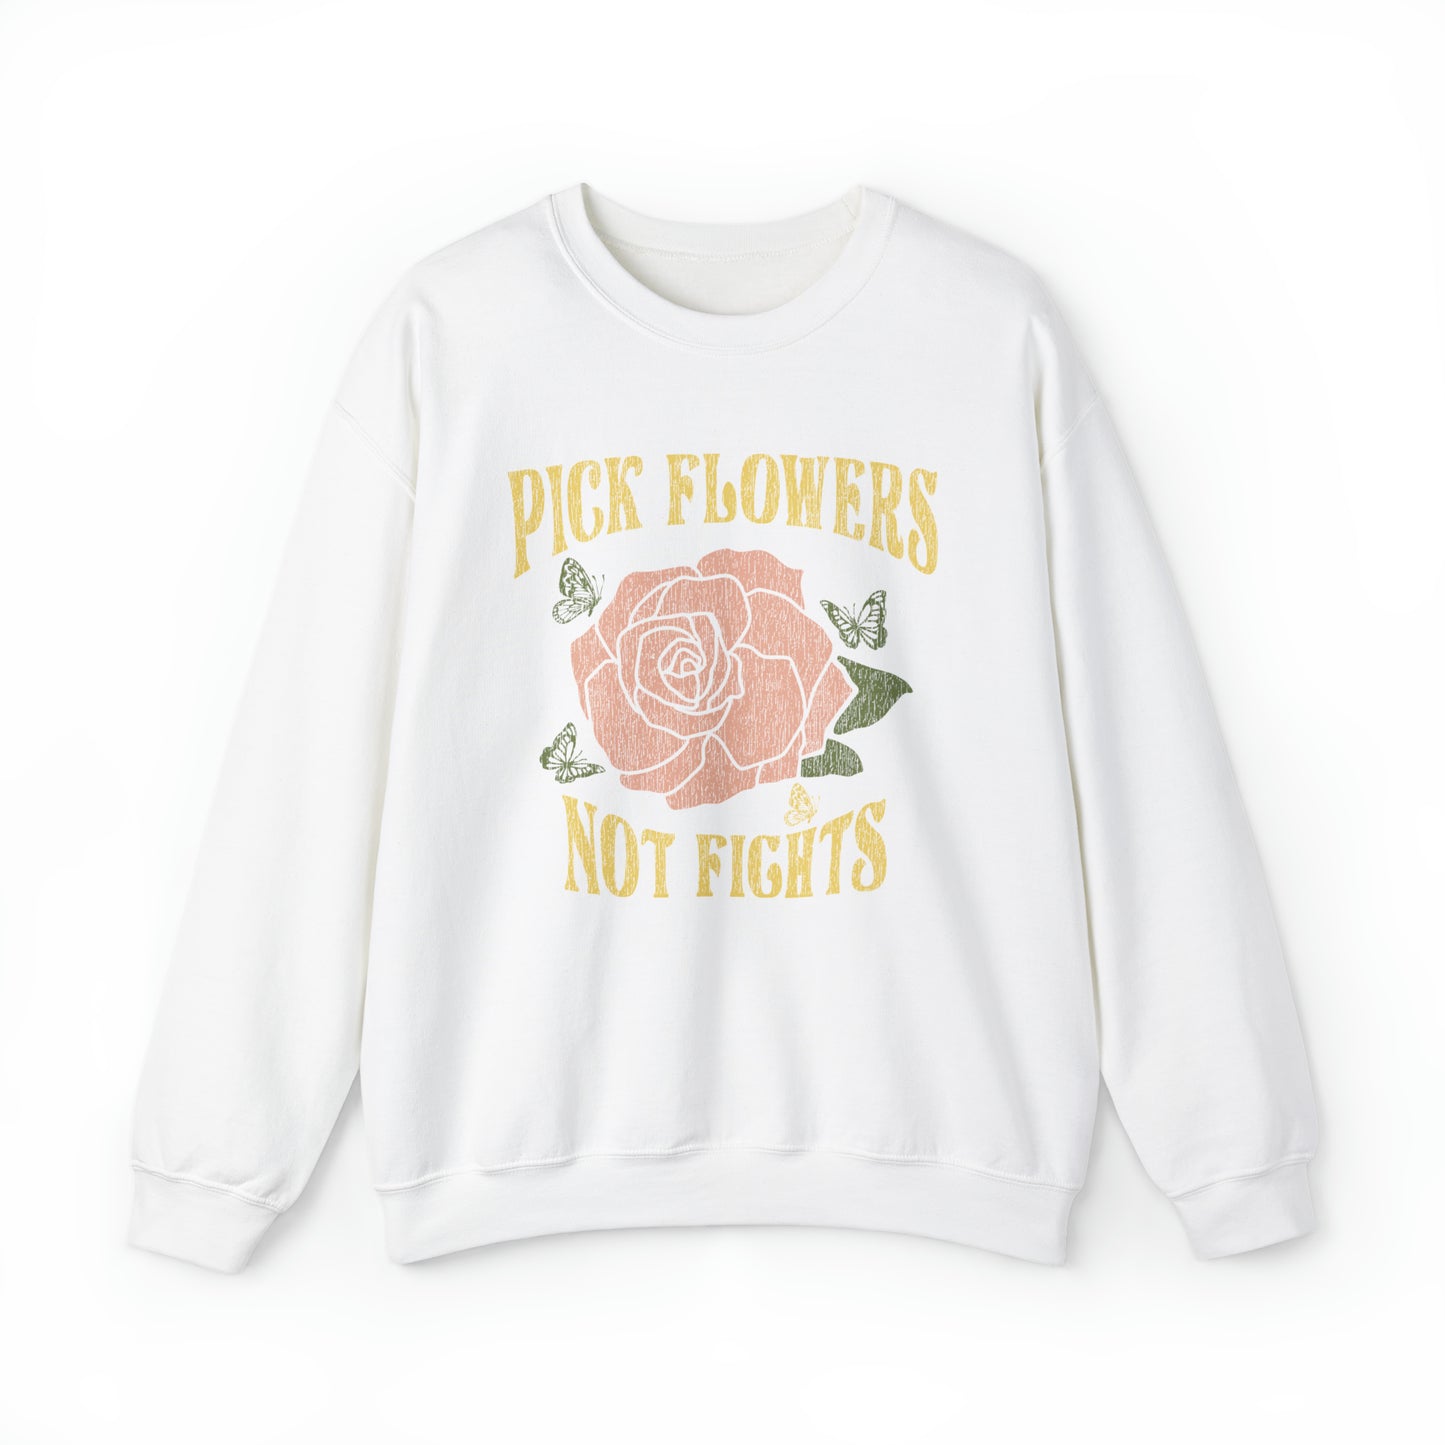 Pick Flowers, Not Fights Gildan Sweatshirt